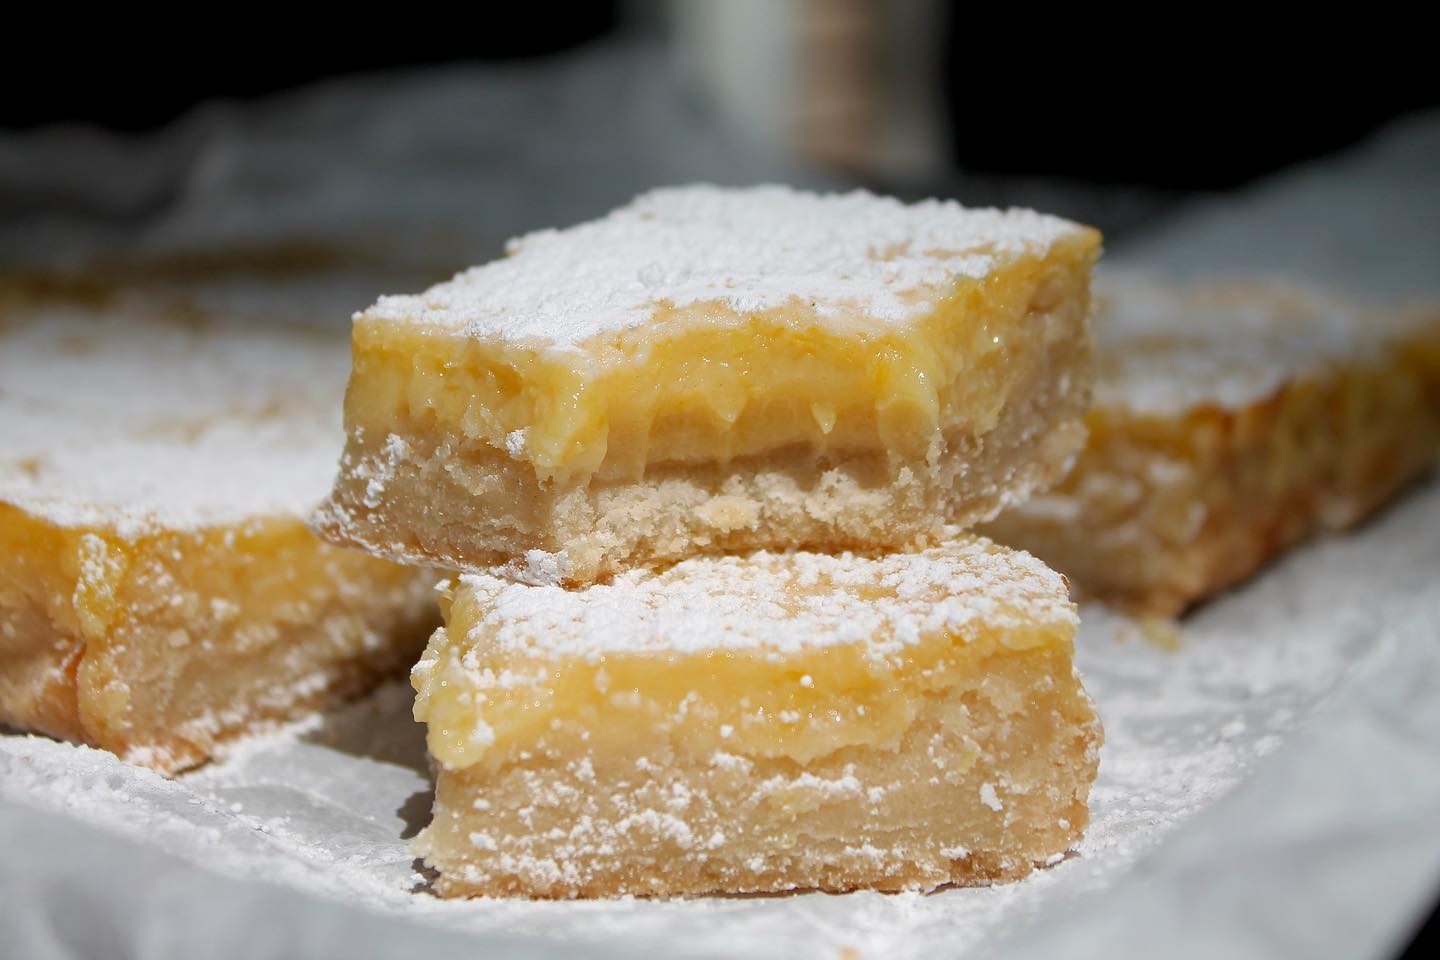 the most classic of lemon desserts will always be lemon bars 🍋